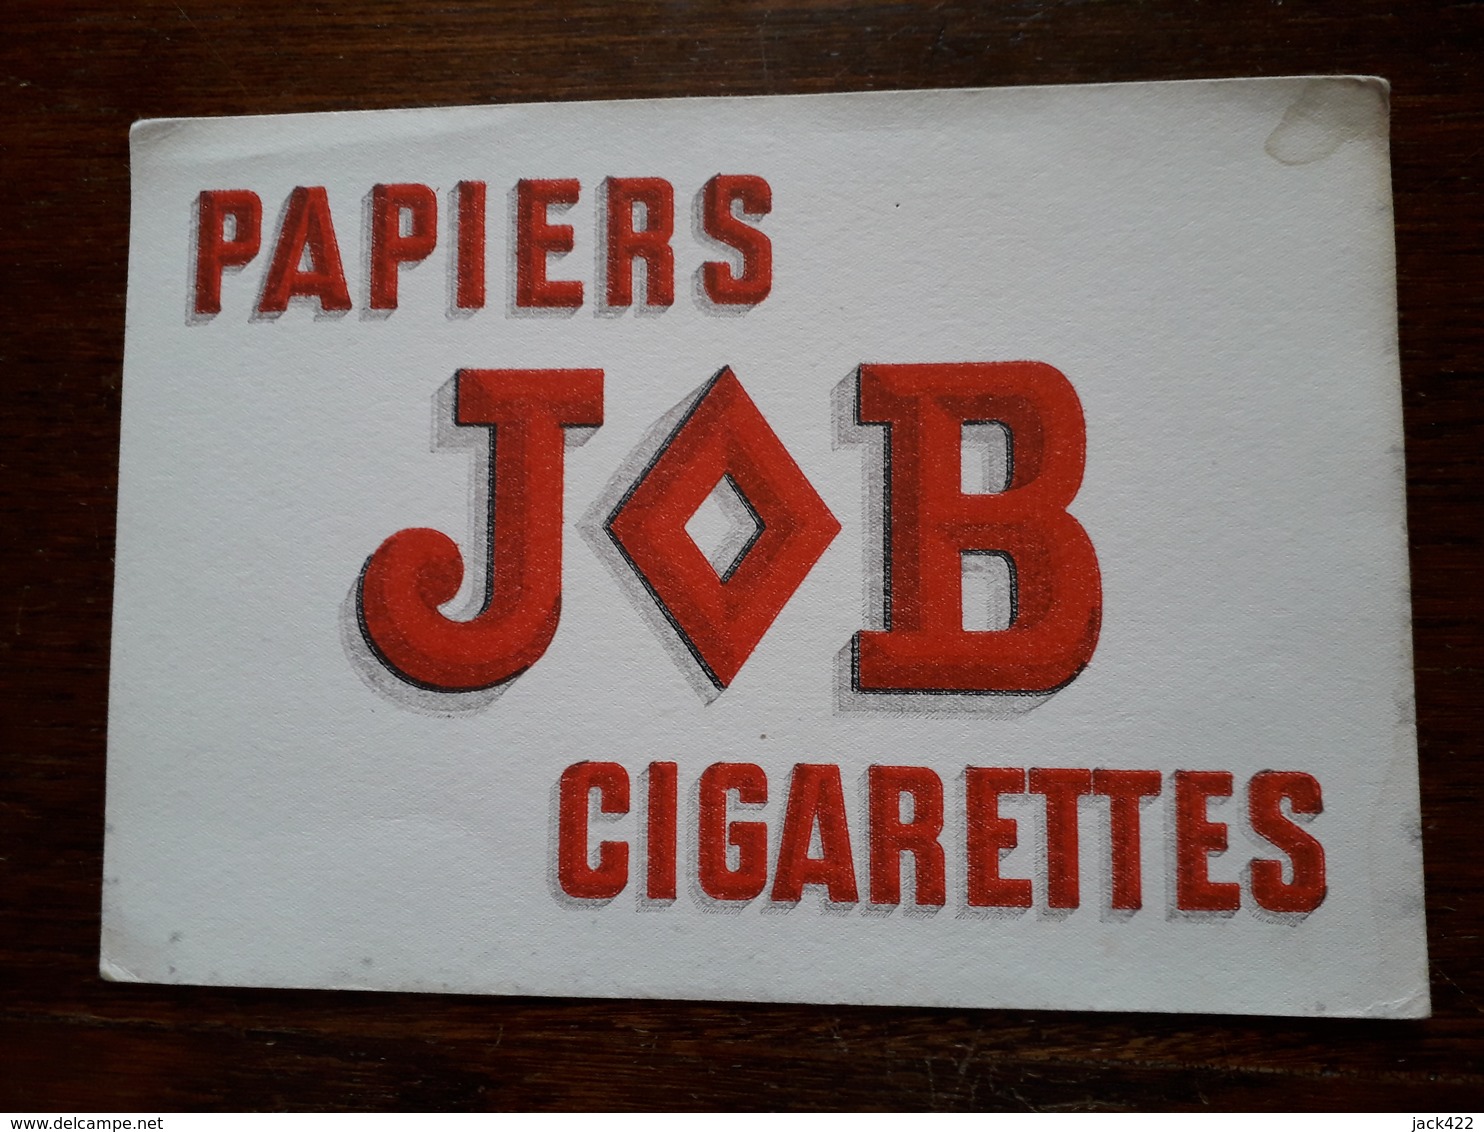 L18/22 Buvard.Papier Job , Cigarettes - Tabaco & Cigarrillos